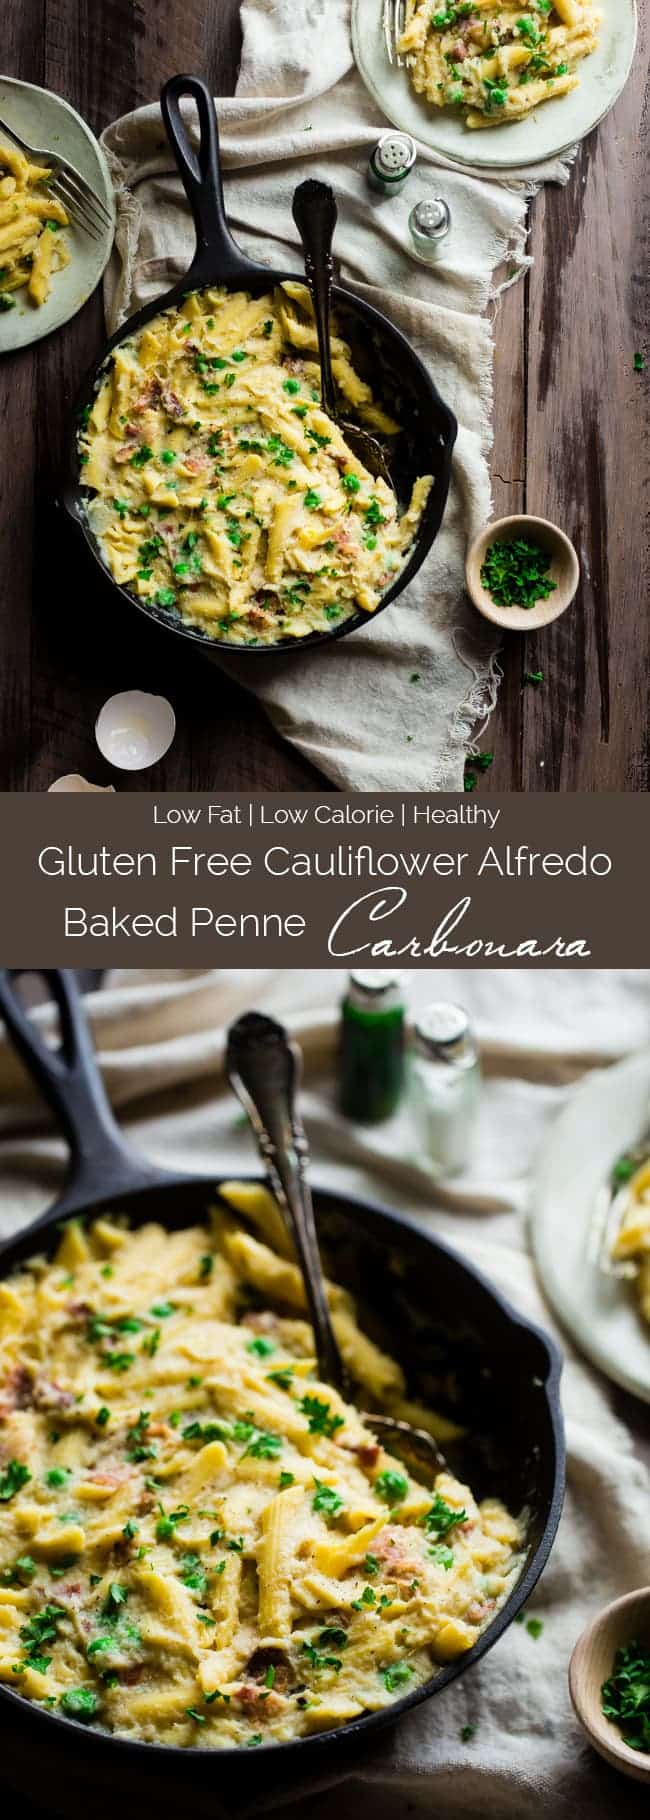 Gluten Free Cauliflower Alfredo Baked Penne Carbonara - This easy pasta bake uses cauliflower alfredo sauce to make it extra creamy! You'll never believe it's dairy/gluten free, low fat and packed with hidden veggies! | Foodfaithfitness.com | @FoodFaithFit